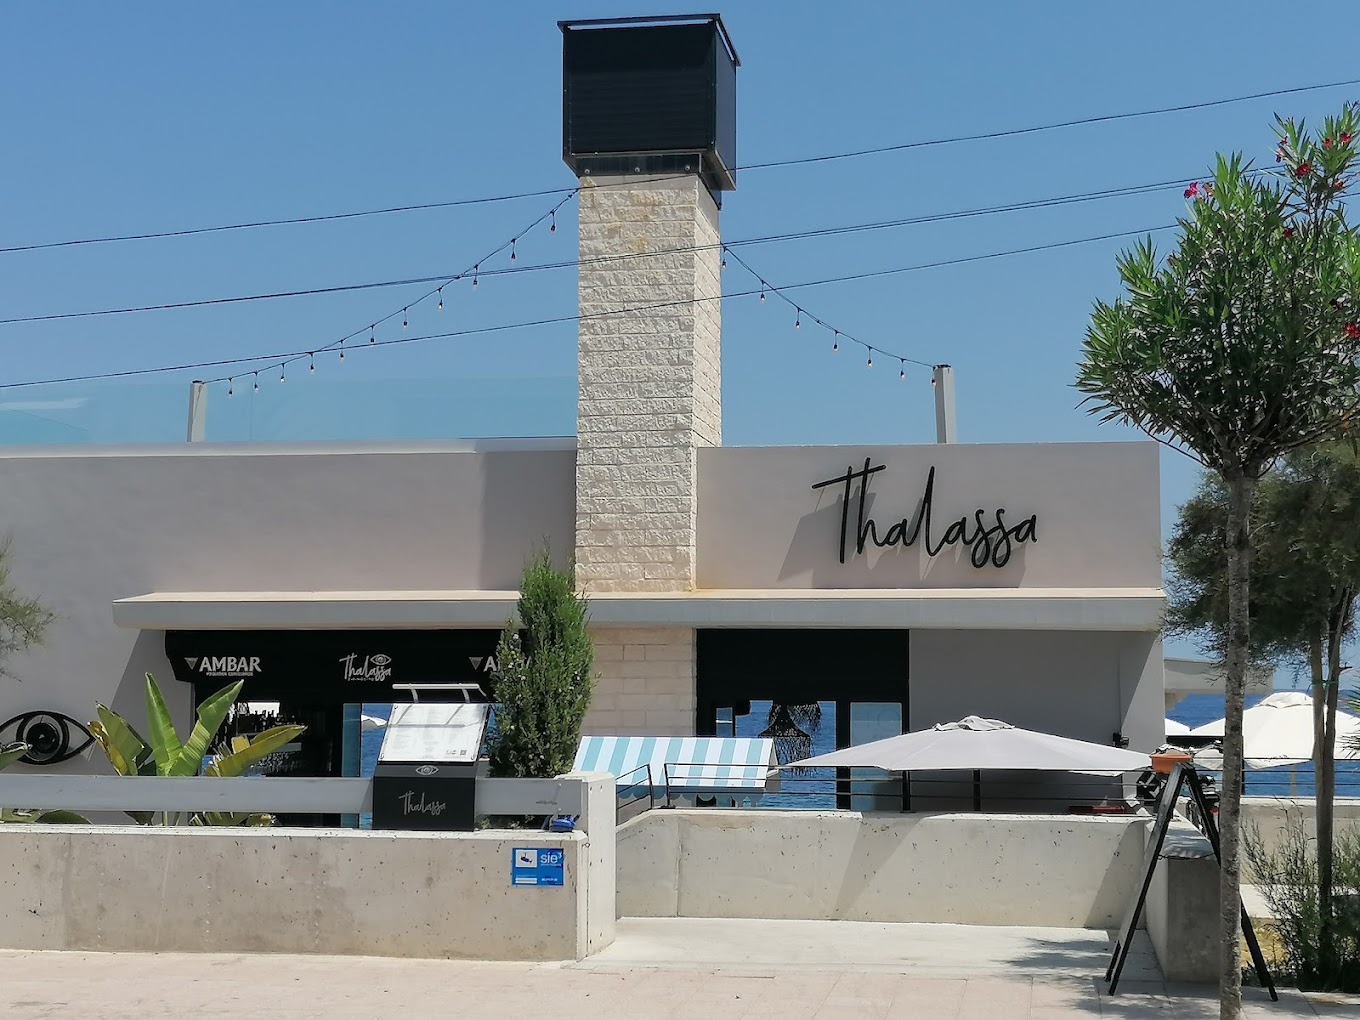 Thalassa restaurant in Javea